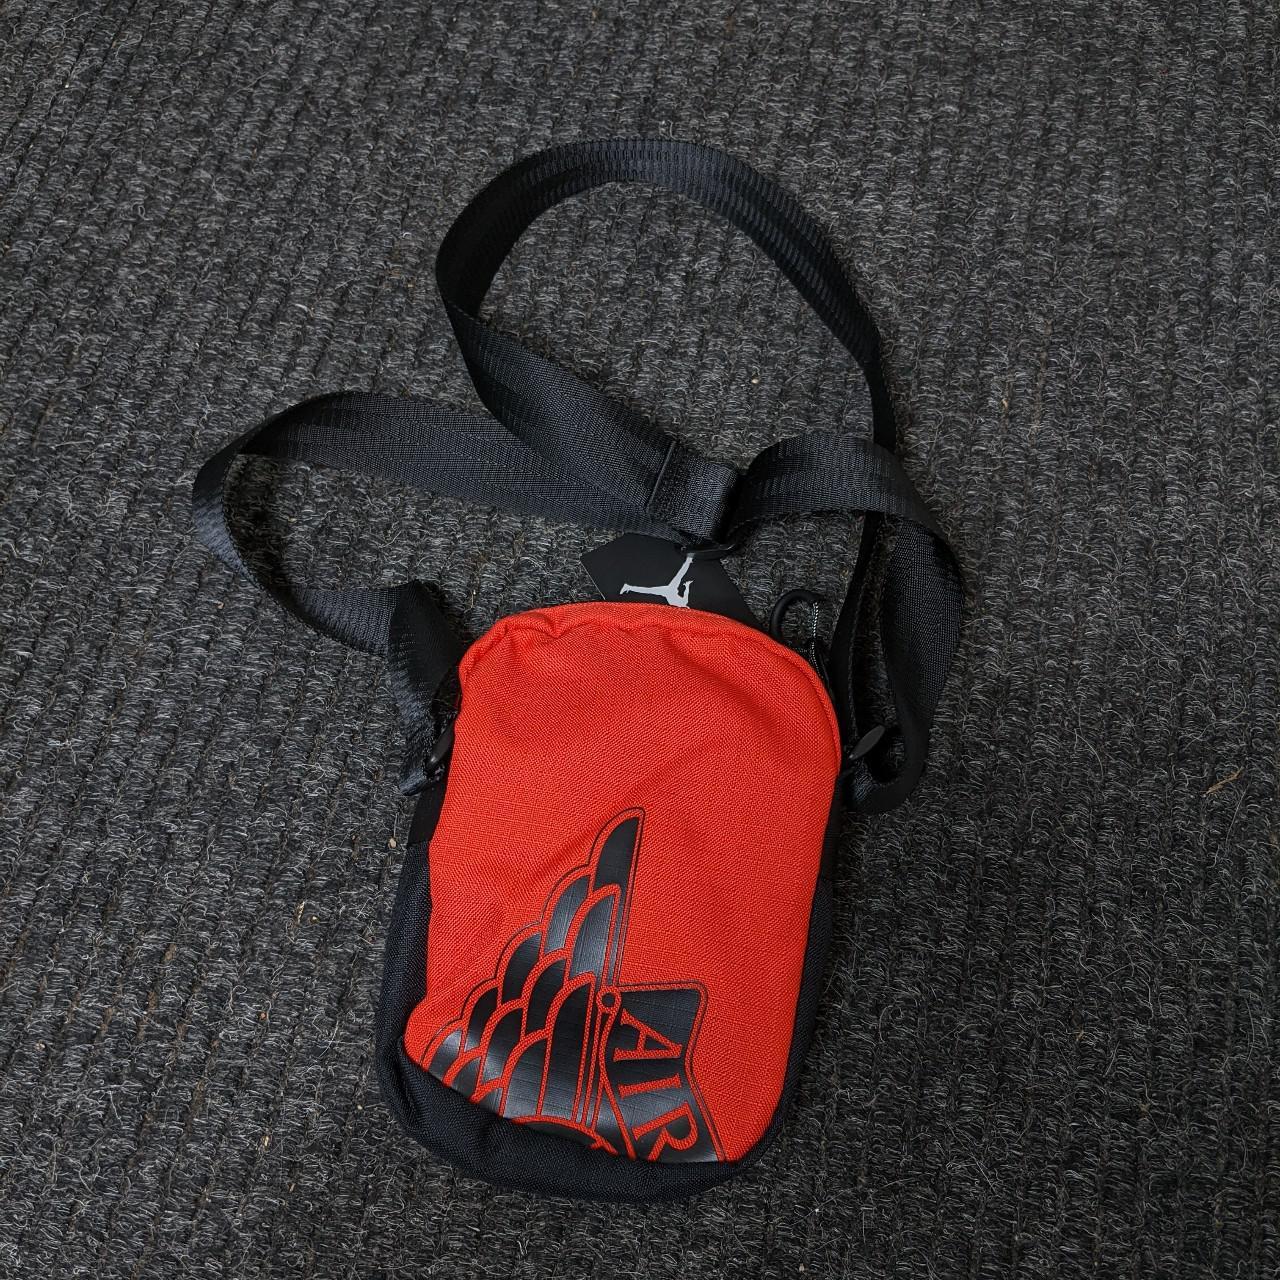 Product Image 2 - Nike Jordan Side Bag

Brand new